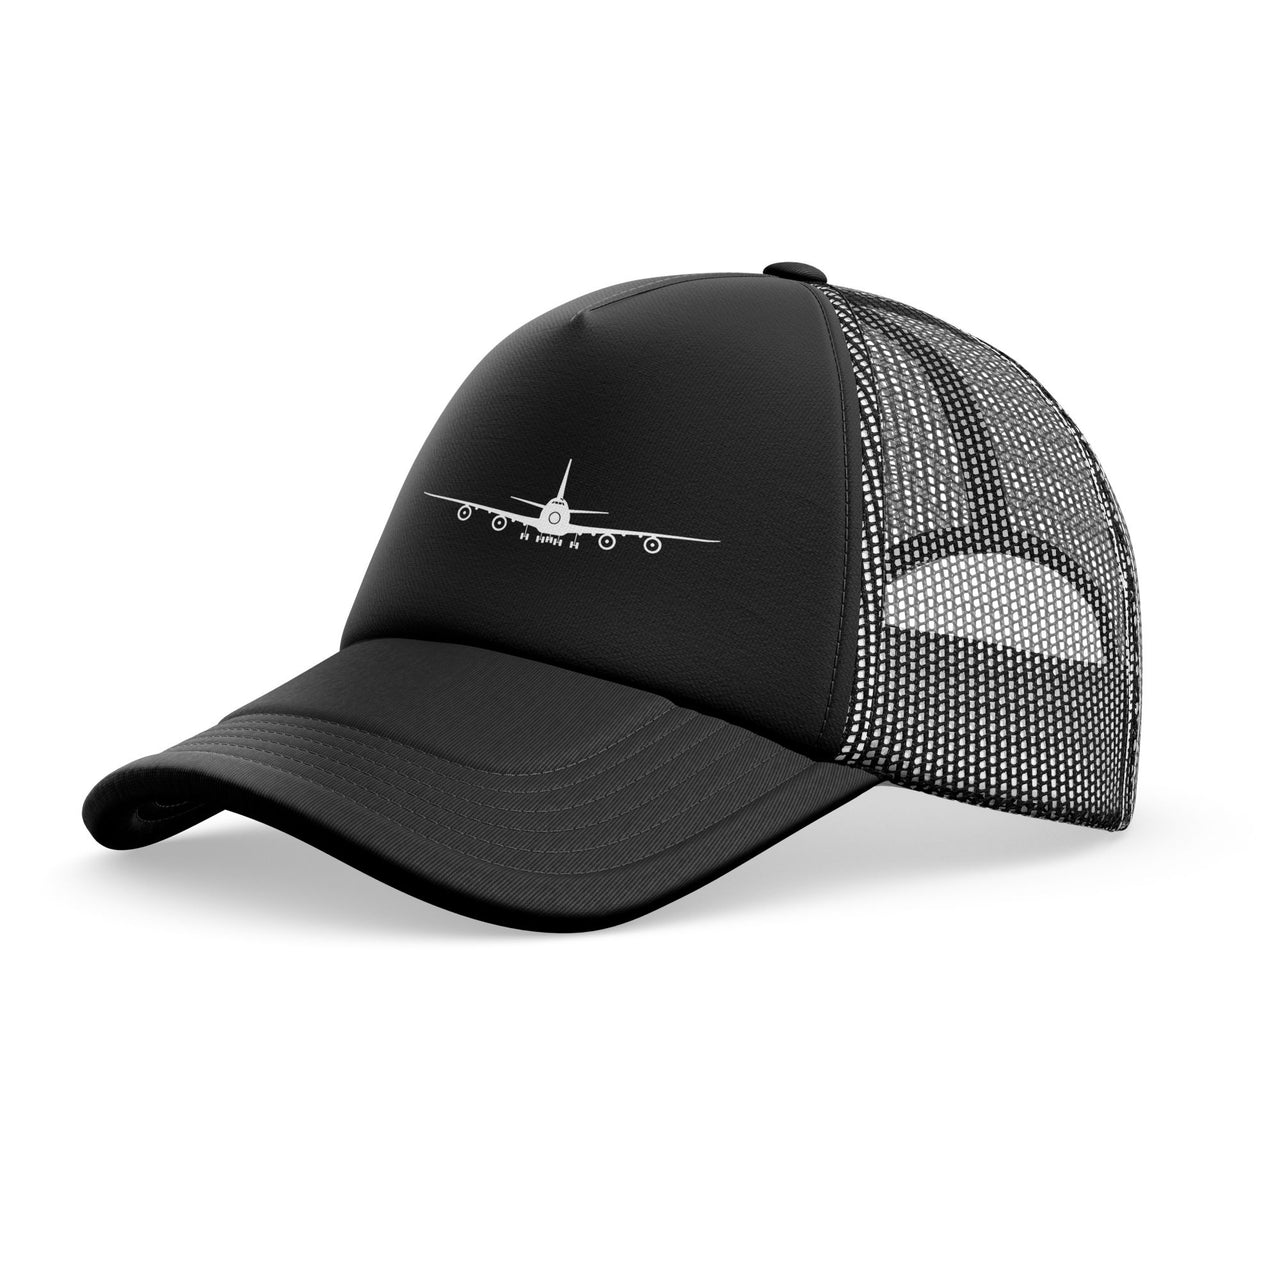 Boeing 747 Silhouette Designed Trucker Caps & Hats